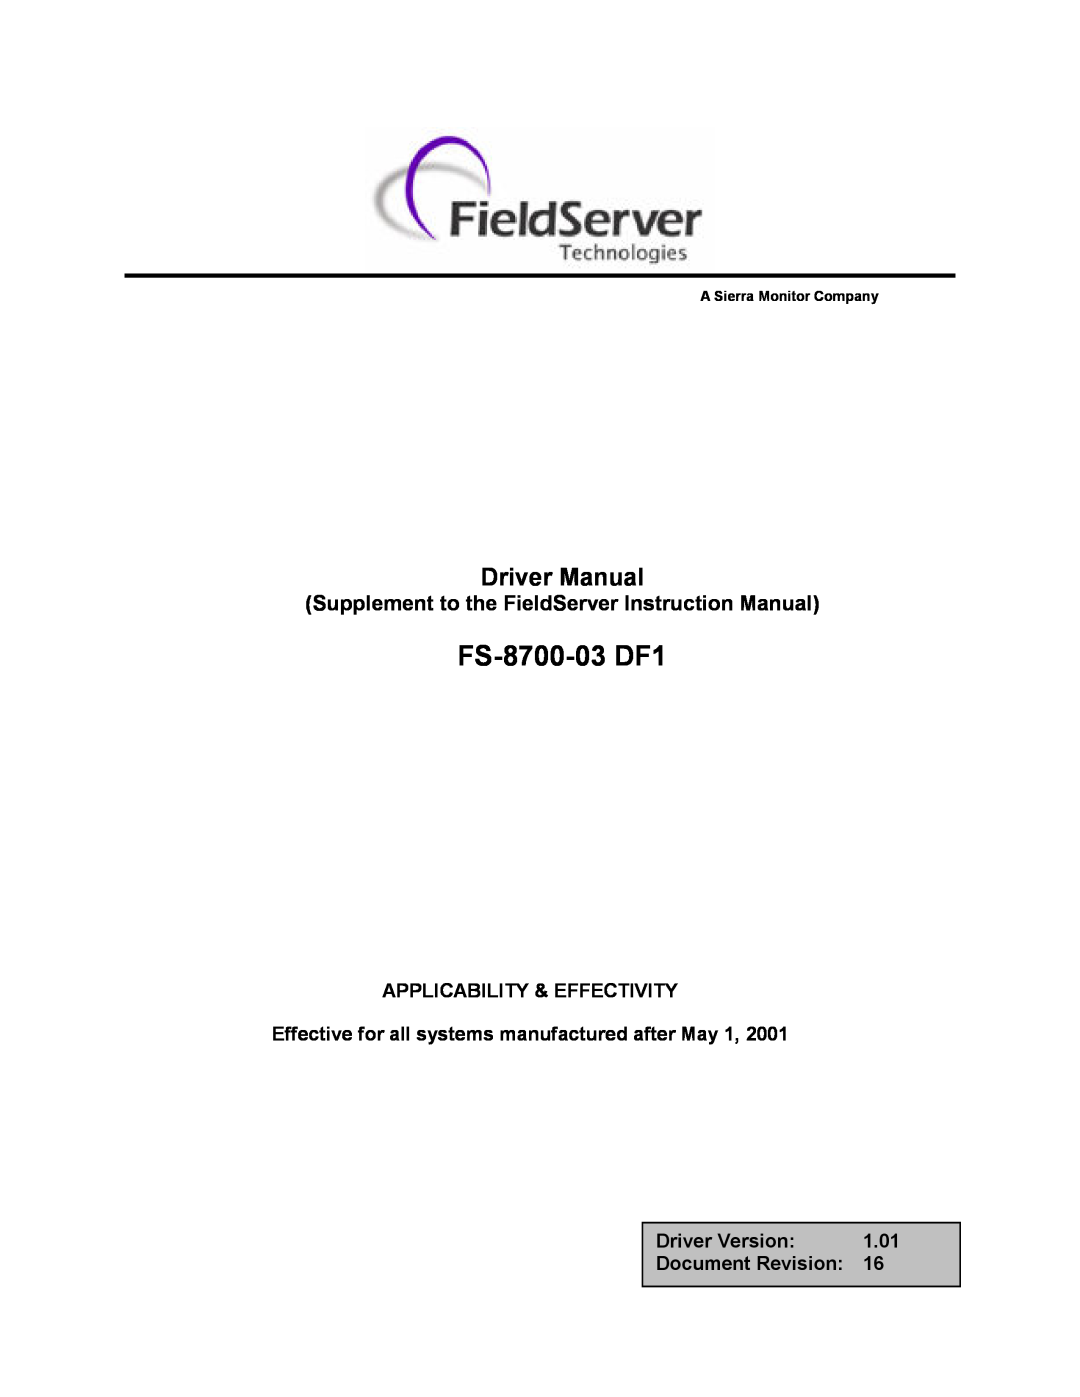 FieldServer FS-8700-03 DF1 instruction manual Supplement to the FieldServer Instruction Manual, Driver Manual 